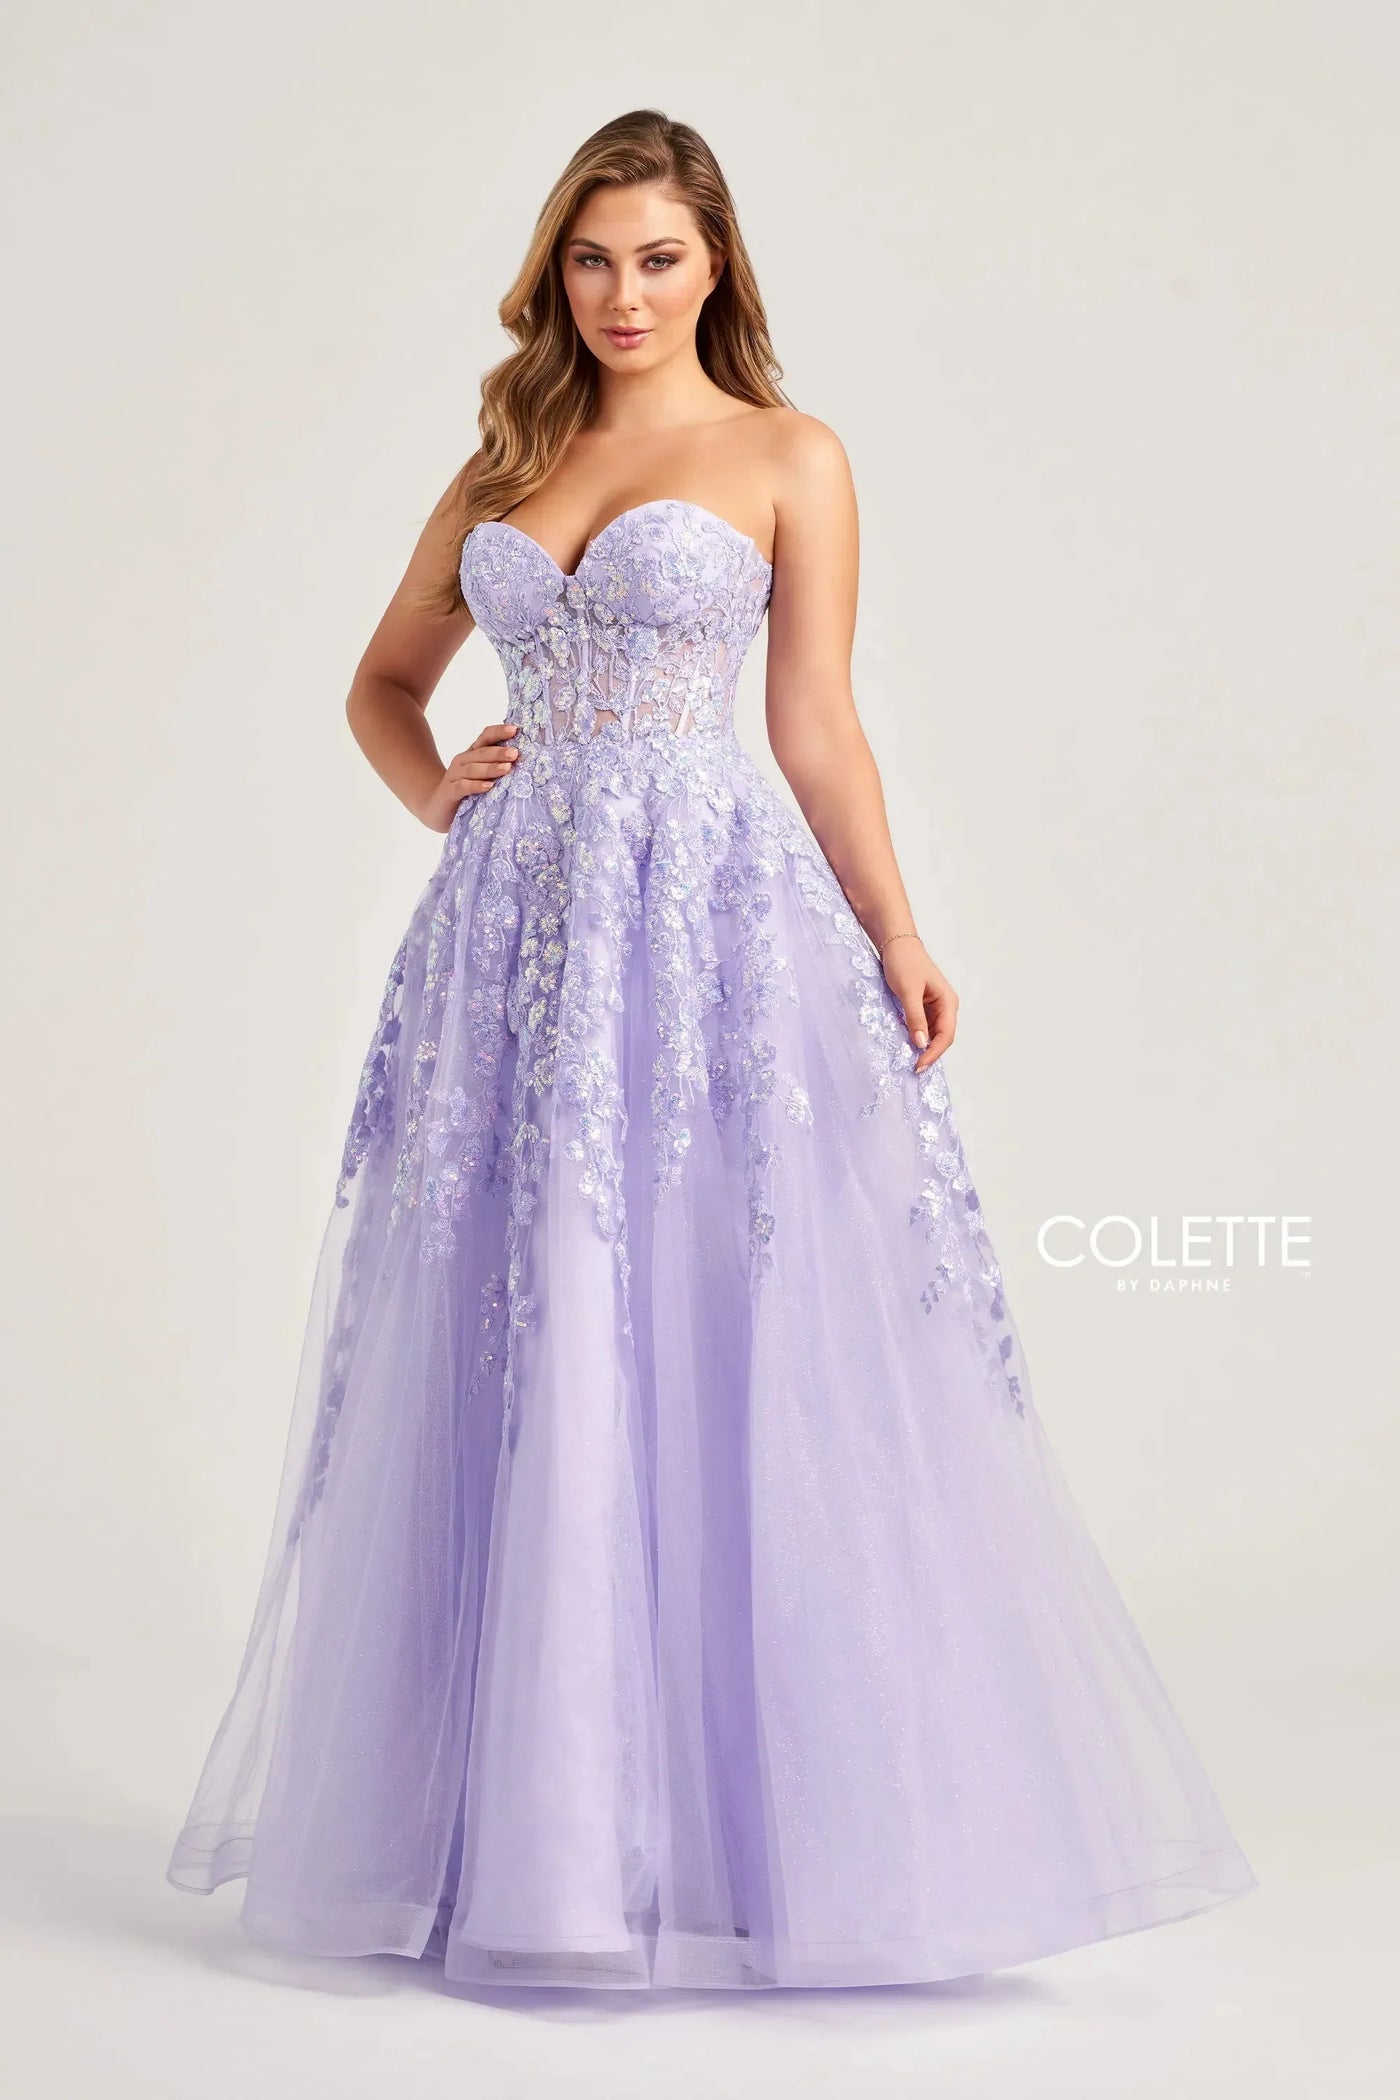 Colette By Daphne CL5136 - Applique Sweetheart Prom Dress